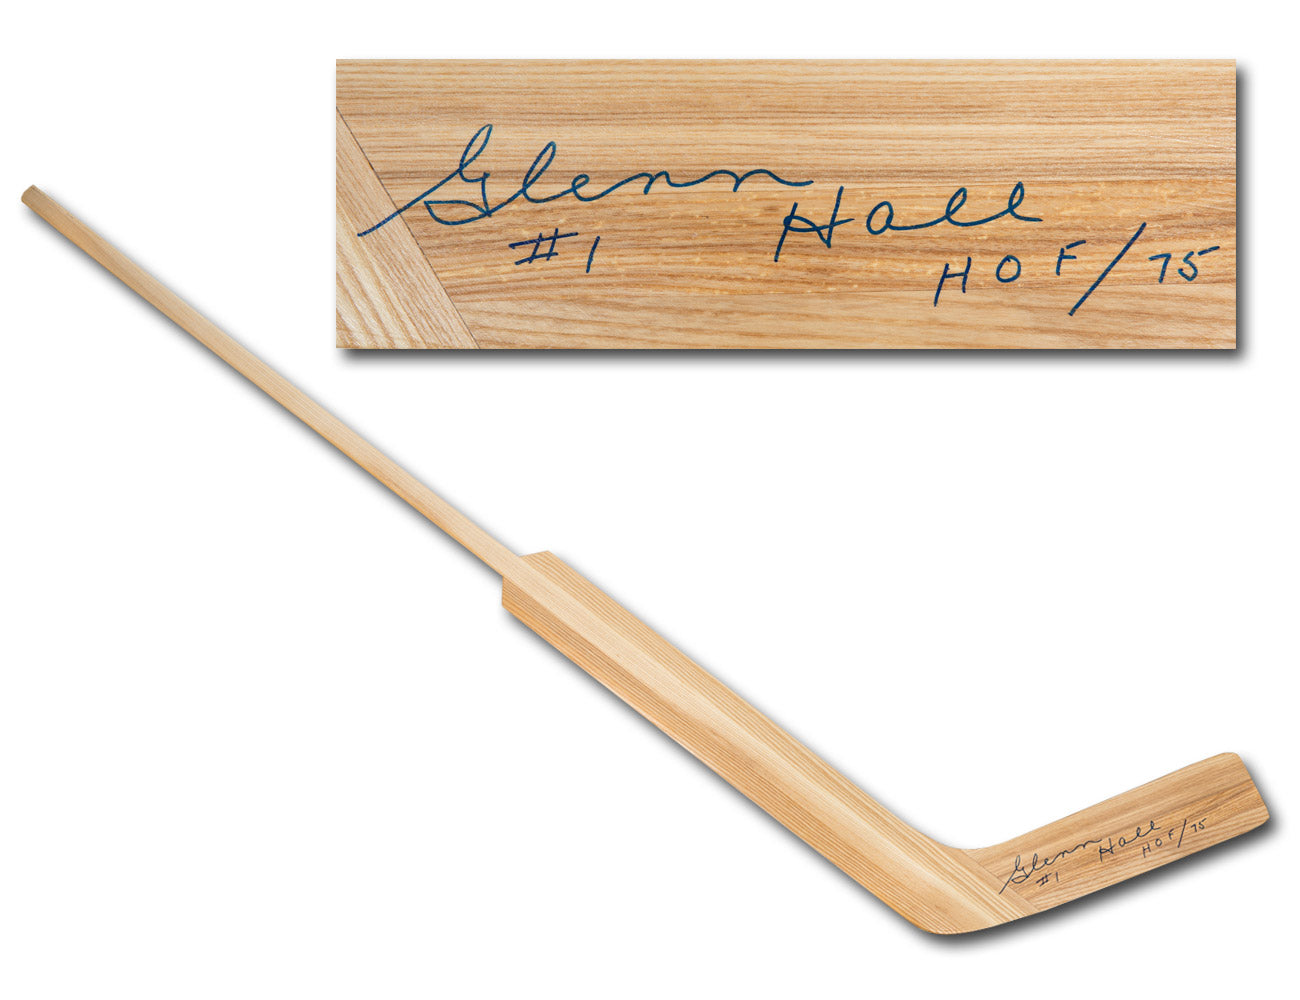 Glenn Hall Autographed Retro Wooden Goalie Stick - Chicago Blackhawks